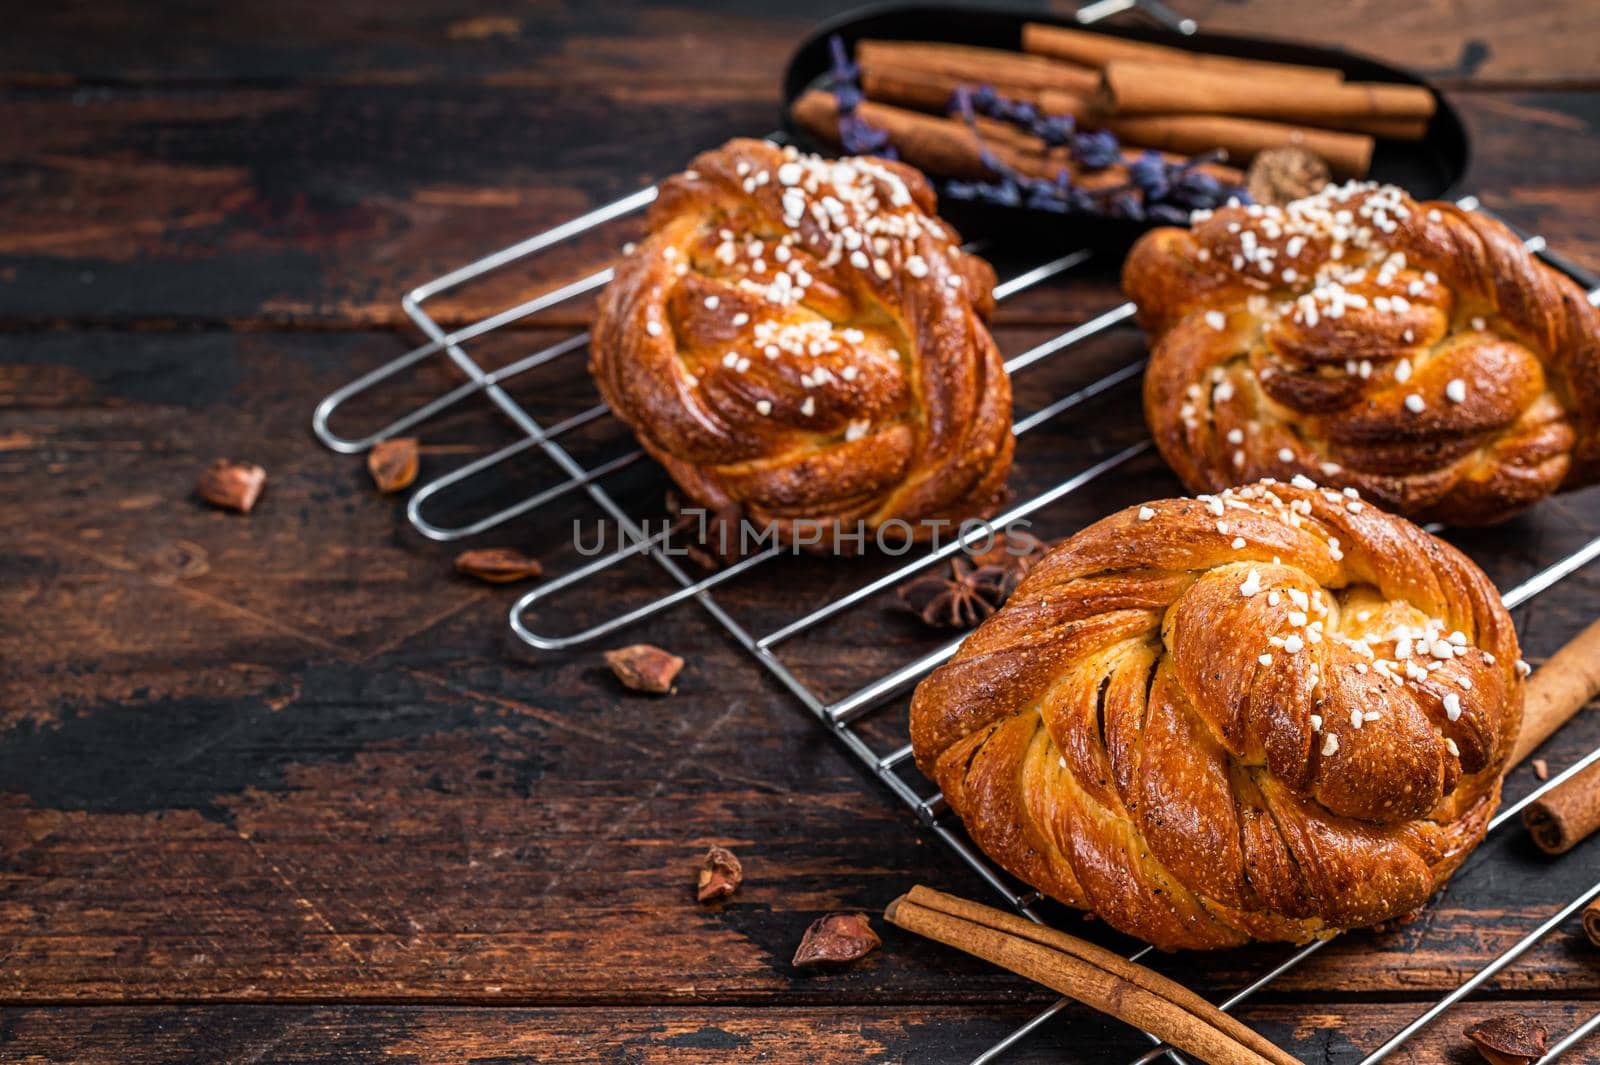 Homemade fresh baked Cinnamon buns or rolls, Swedish Kanelbullar. Dark wooden background. Top view. Copy space.